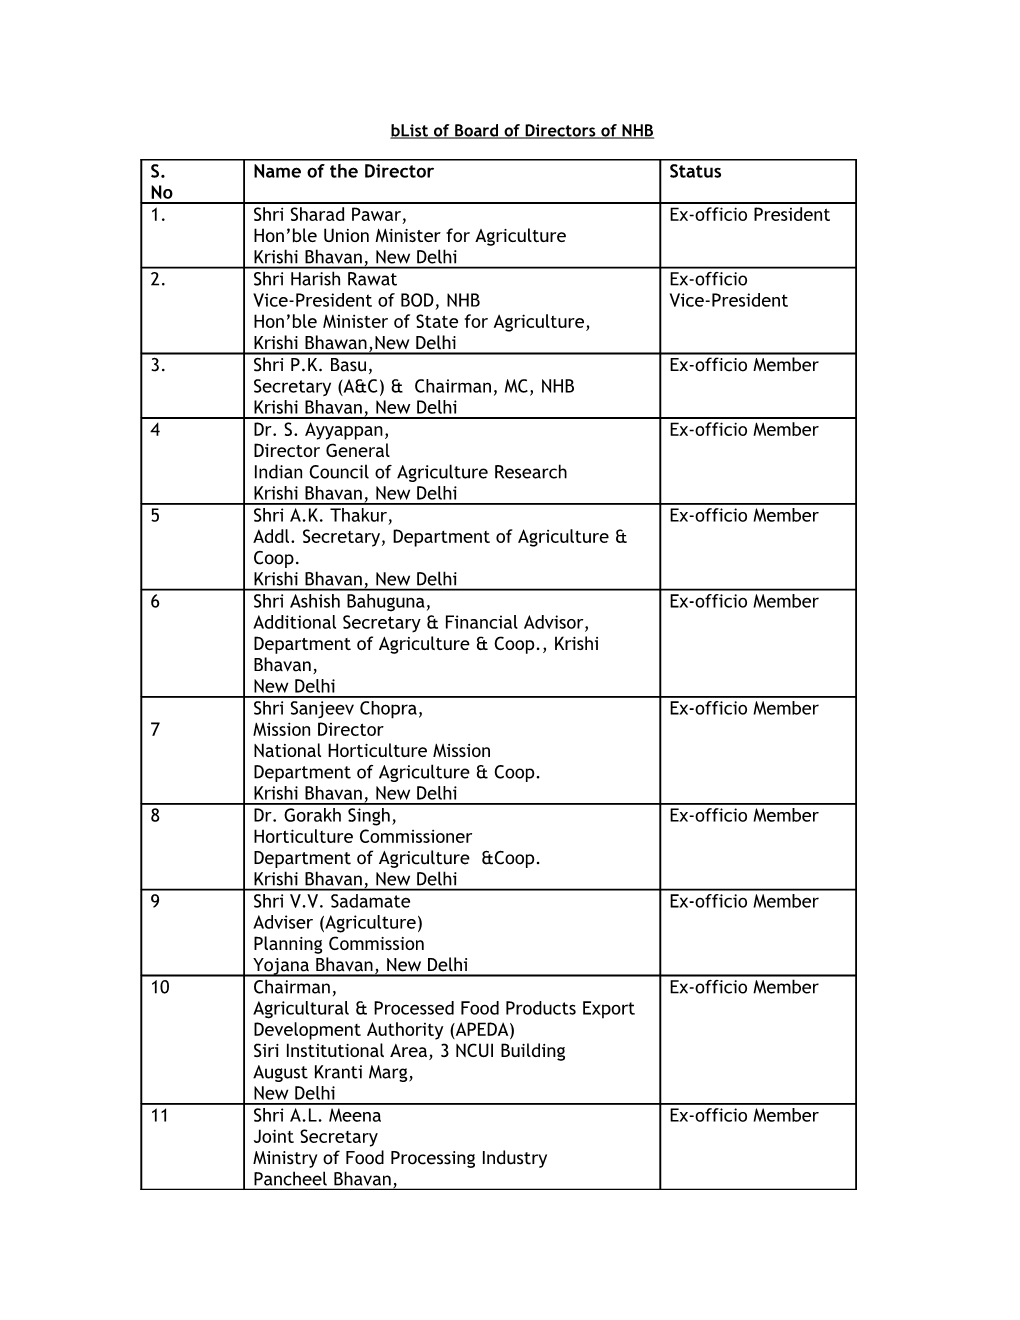 List of Board of Directors of NHB